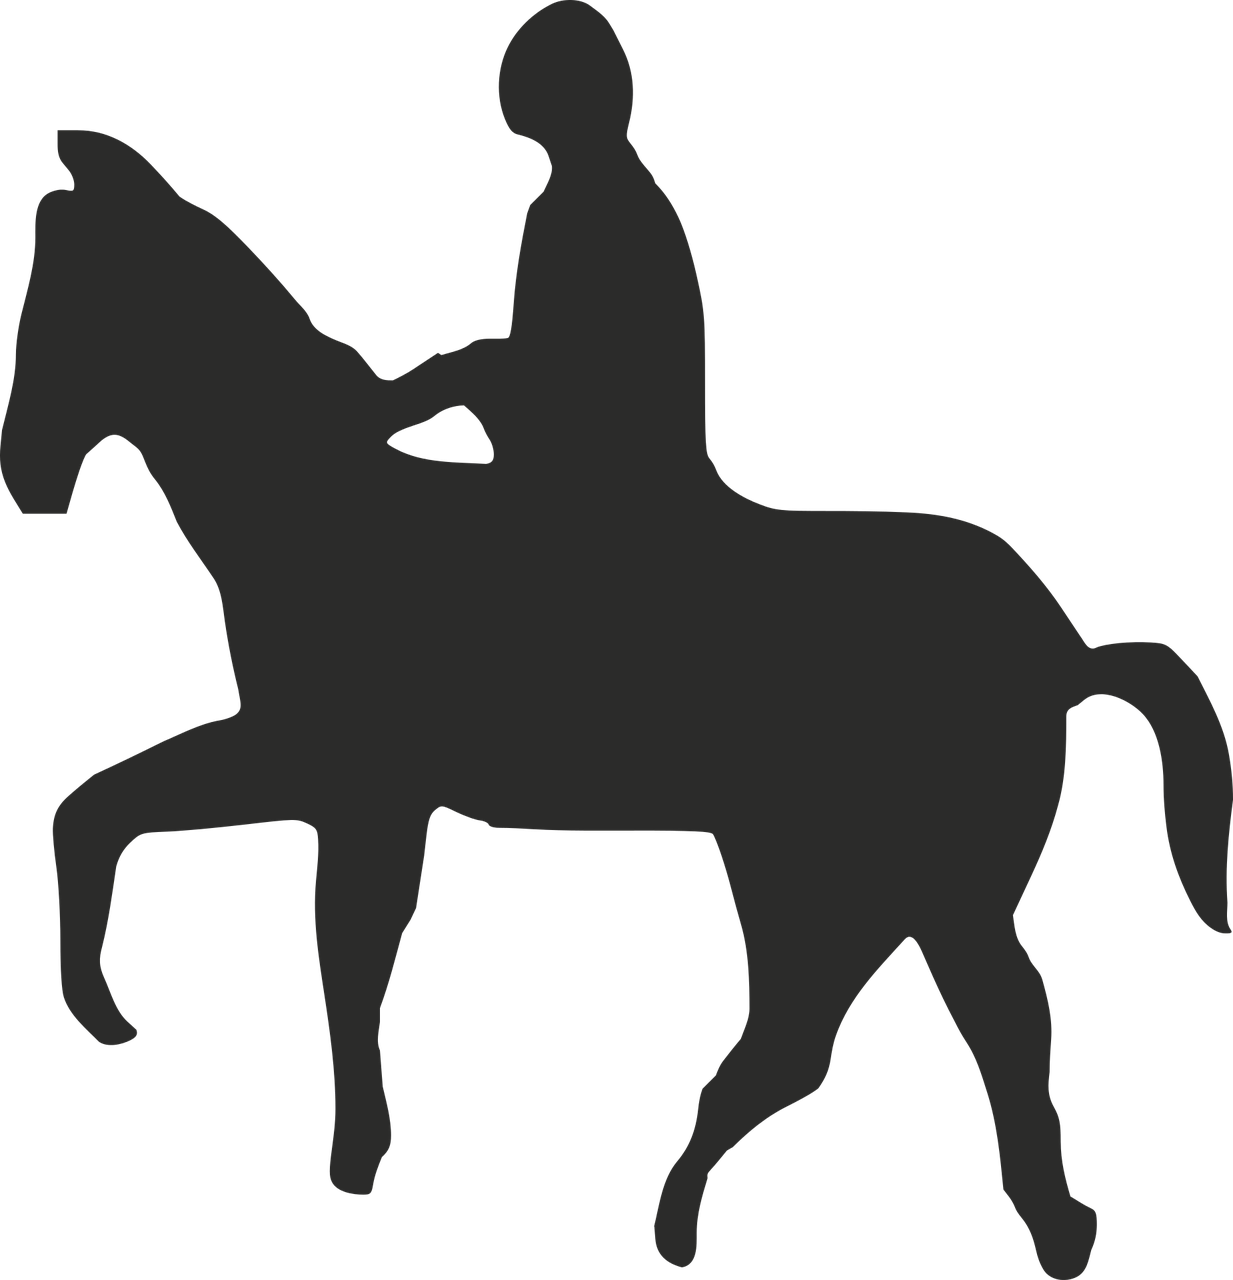 Horse,man,riding,sport,guy - free image from needpix.com